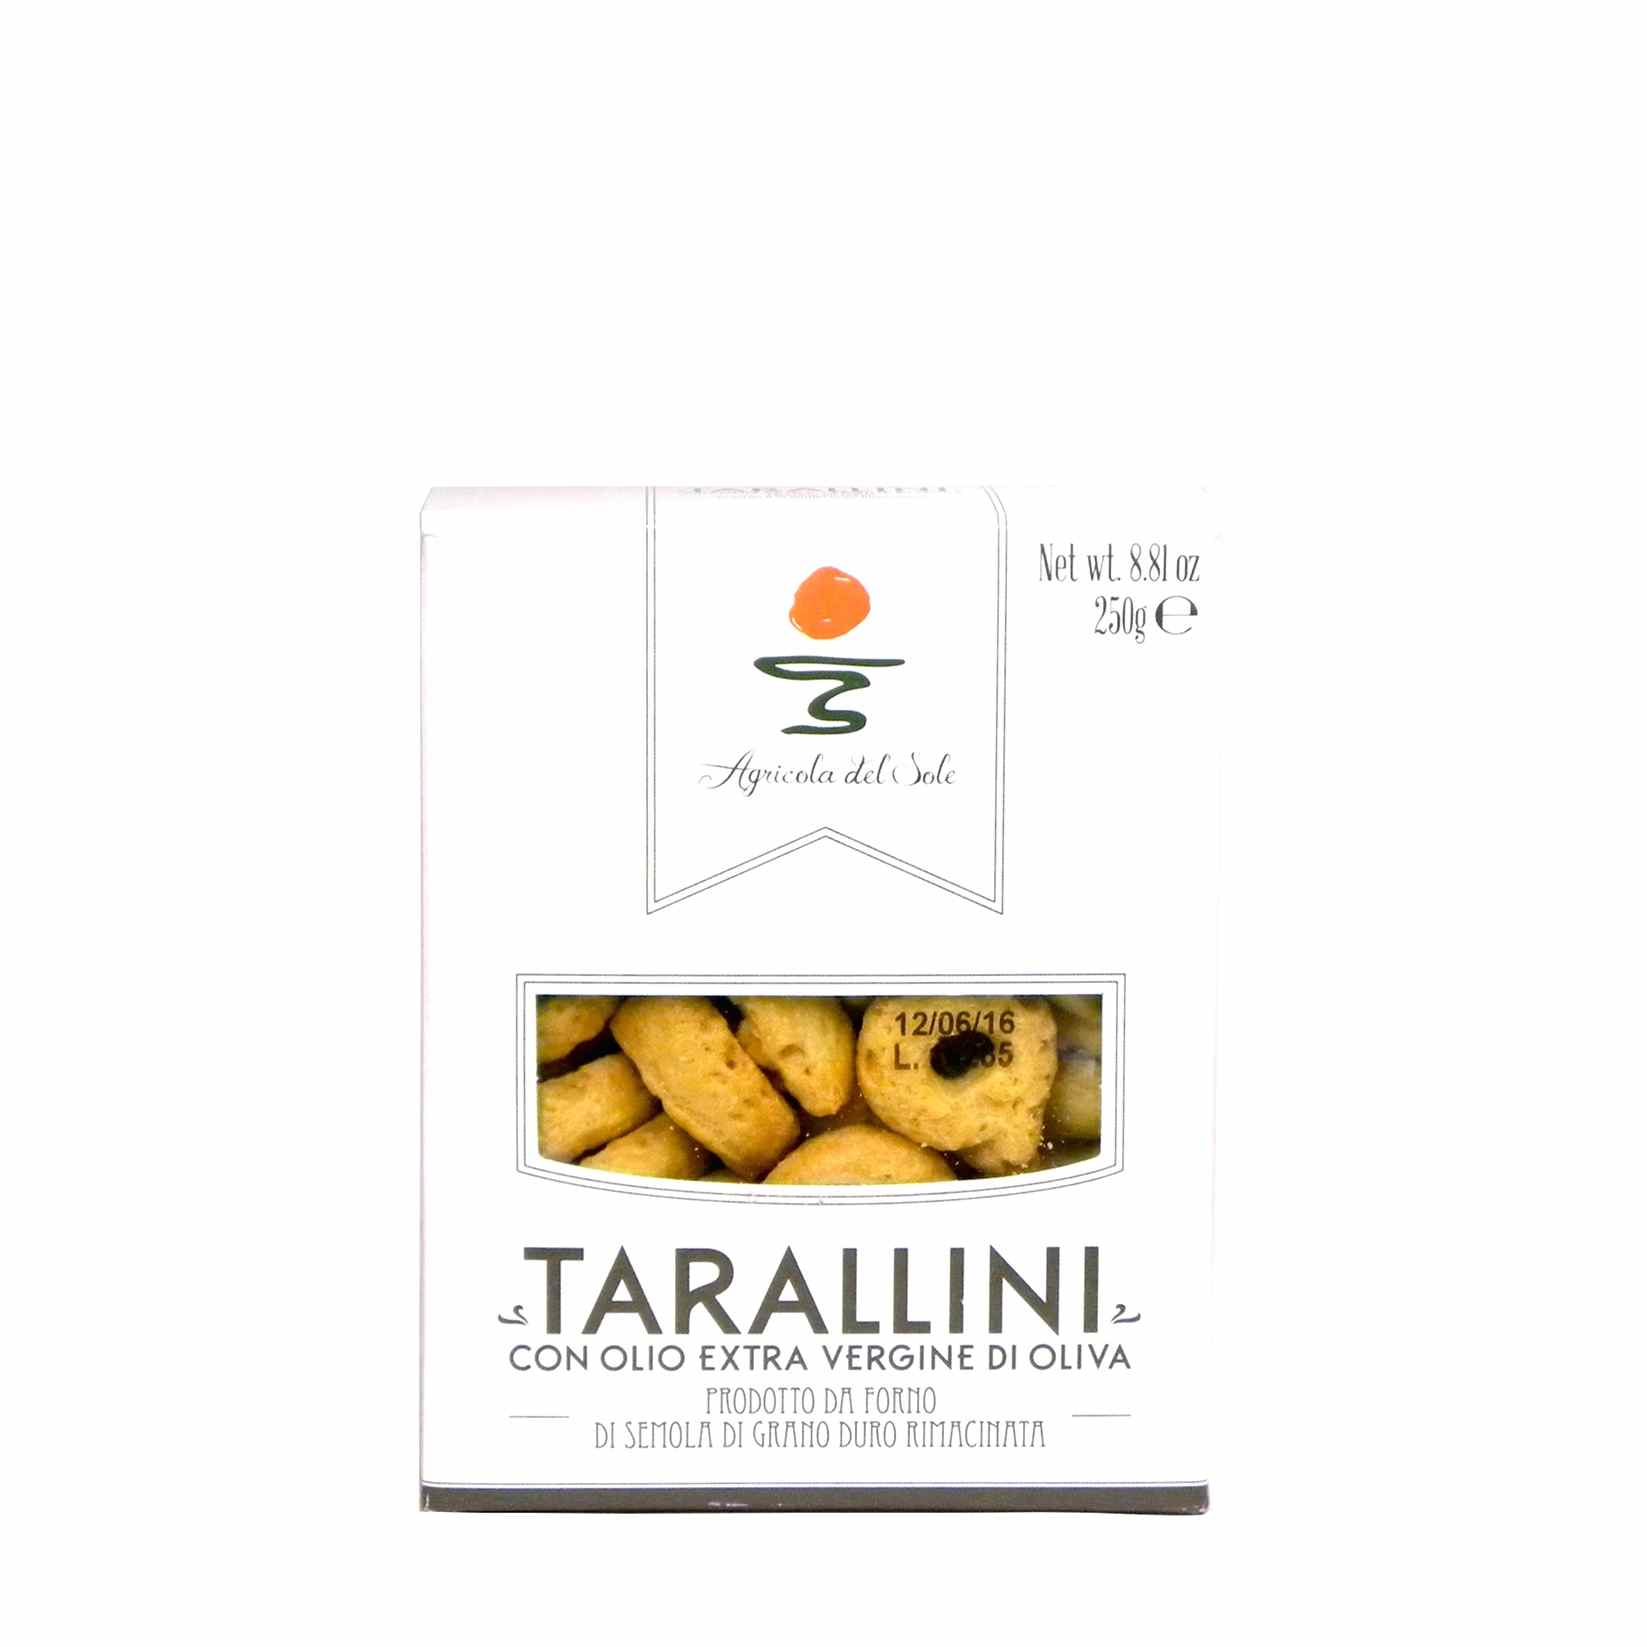 Agricola del Sole Tarallini Olio extravergine oliva – Apulia Tarallini extra virgin olive oil – Gustorotondo – Italian food boutique